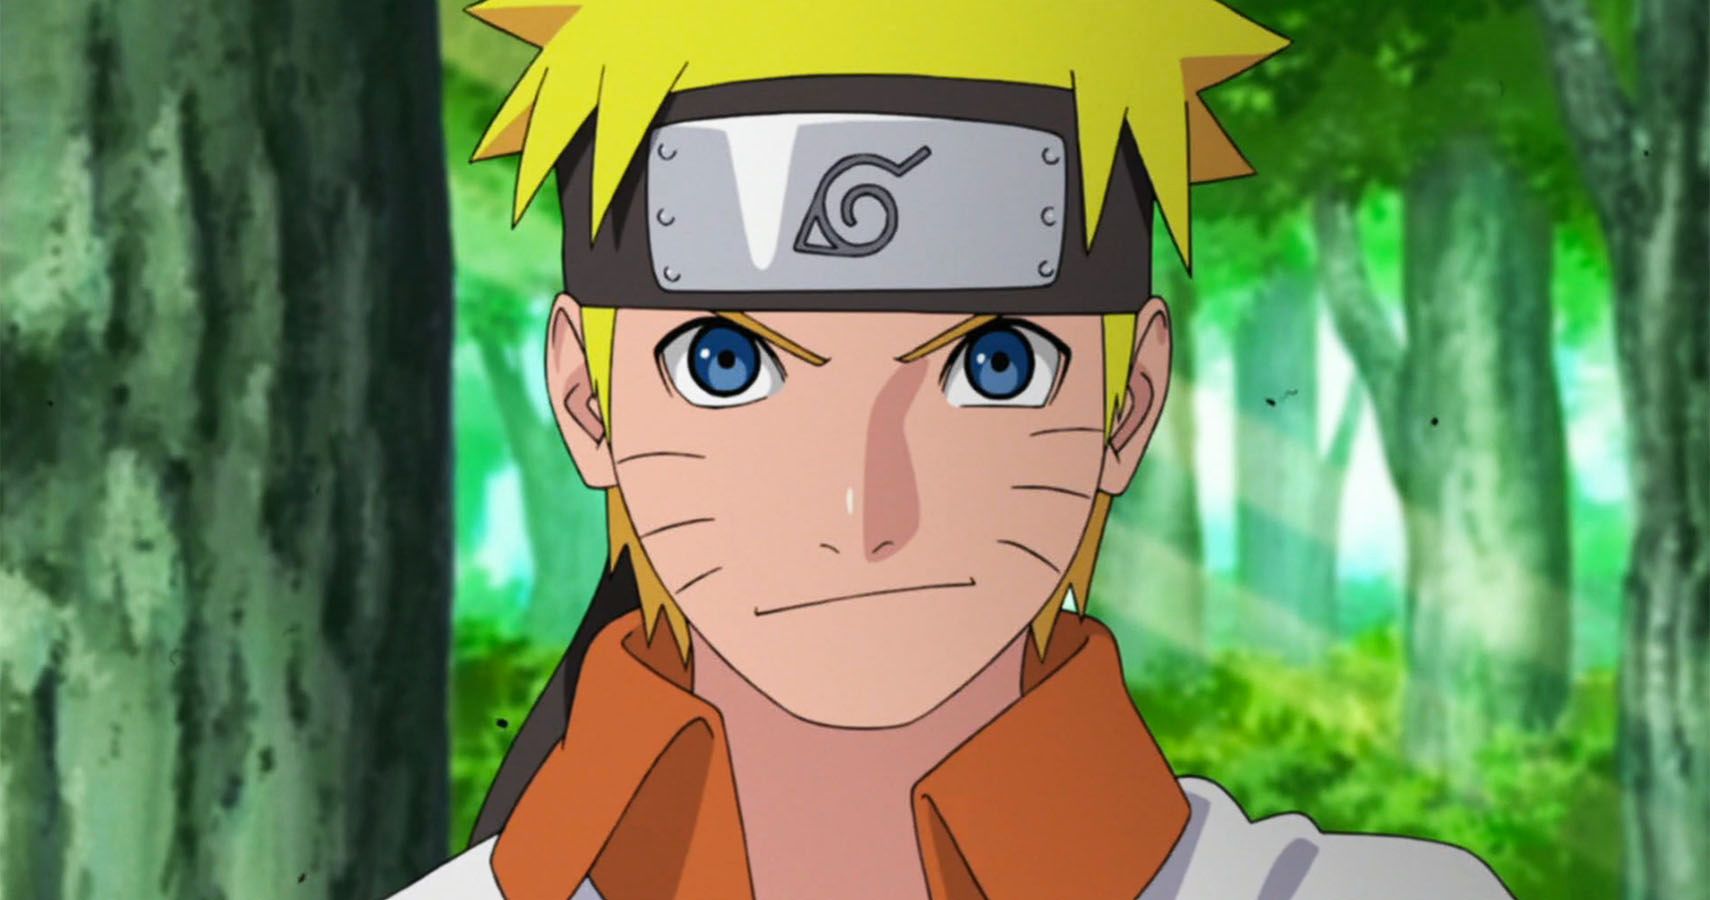 Anime series: Is Boruto more powerful than Naruto?